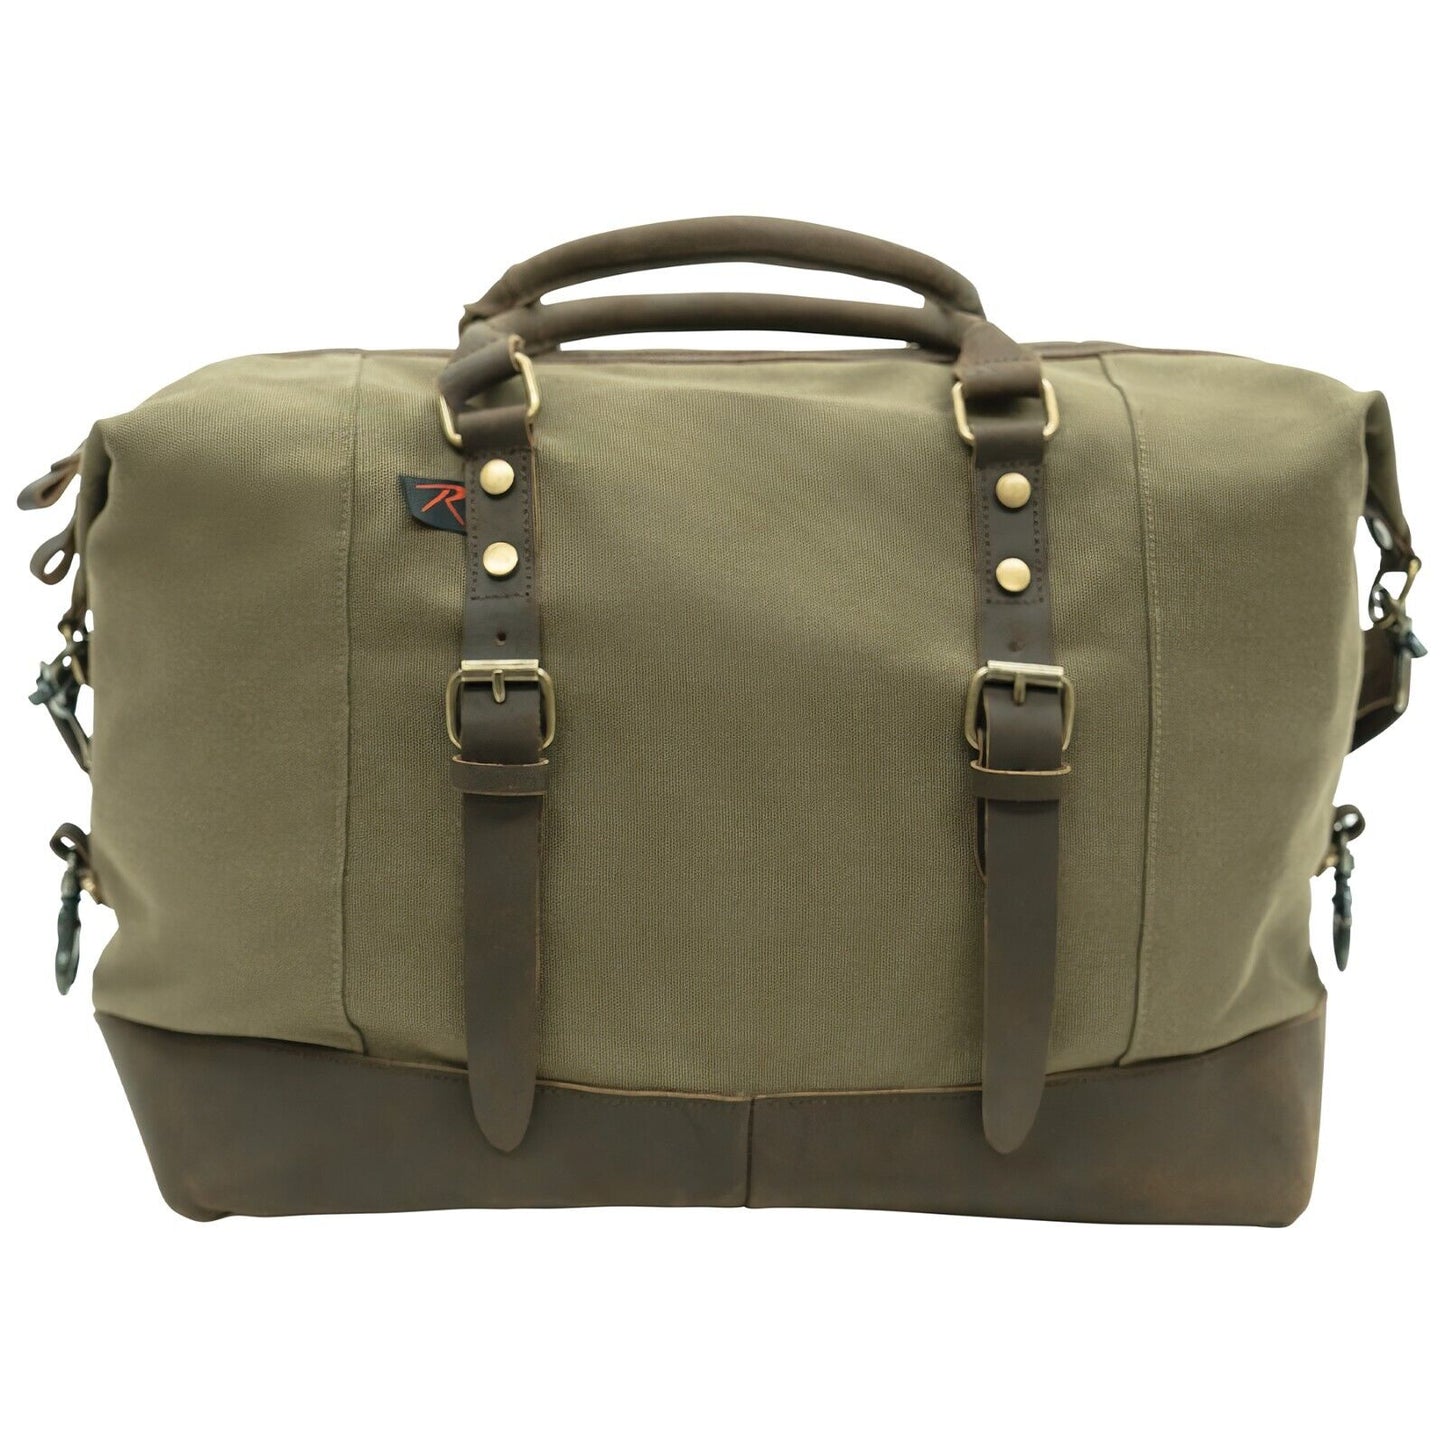 Rothco Carry-On Travel Bag - Olive Drab Canvas Duffle Bag